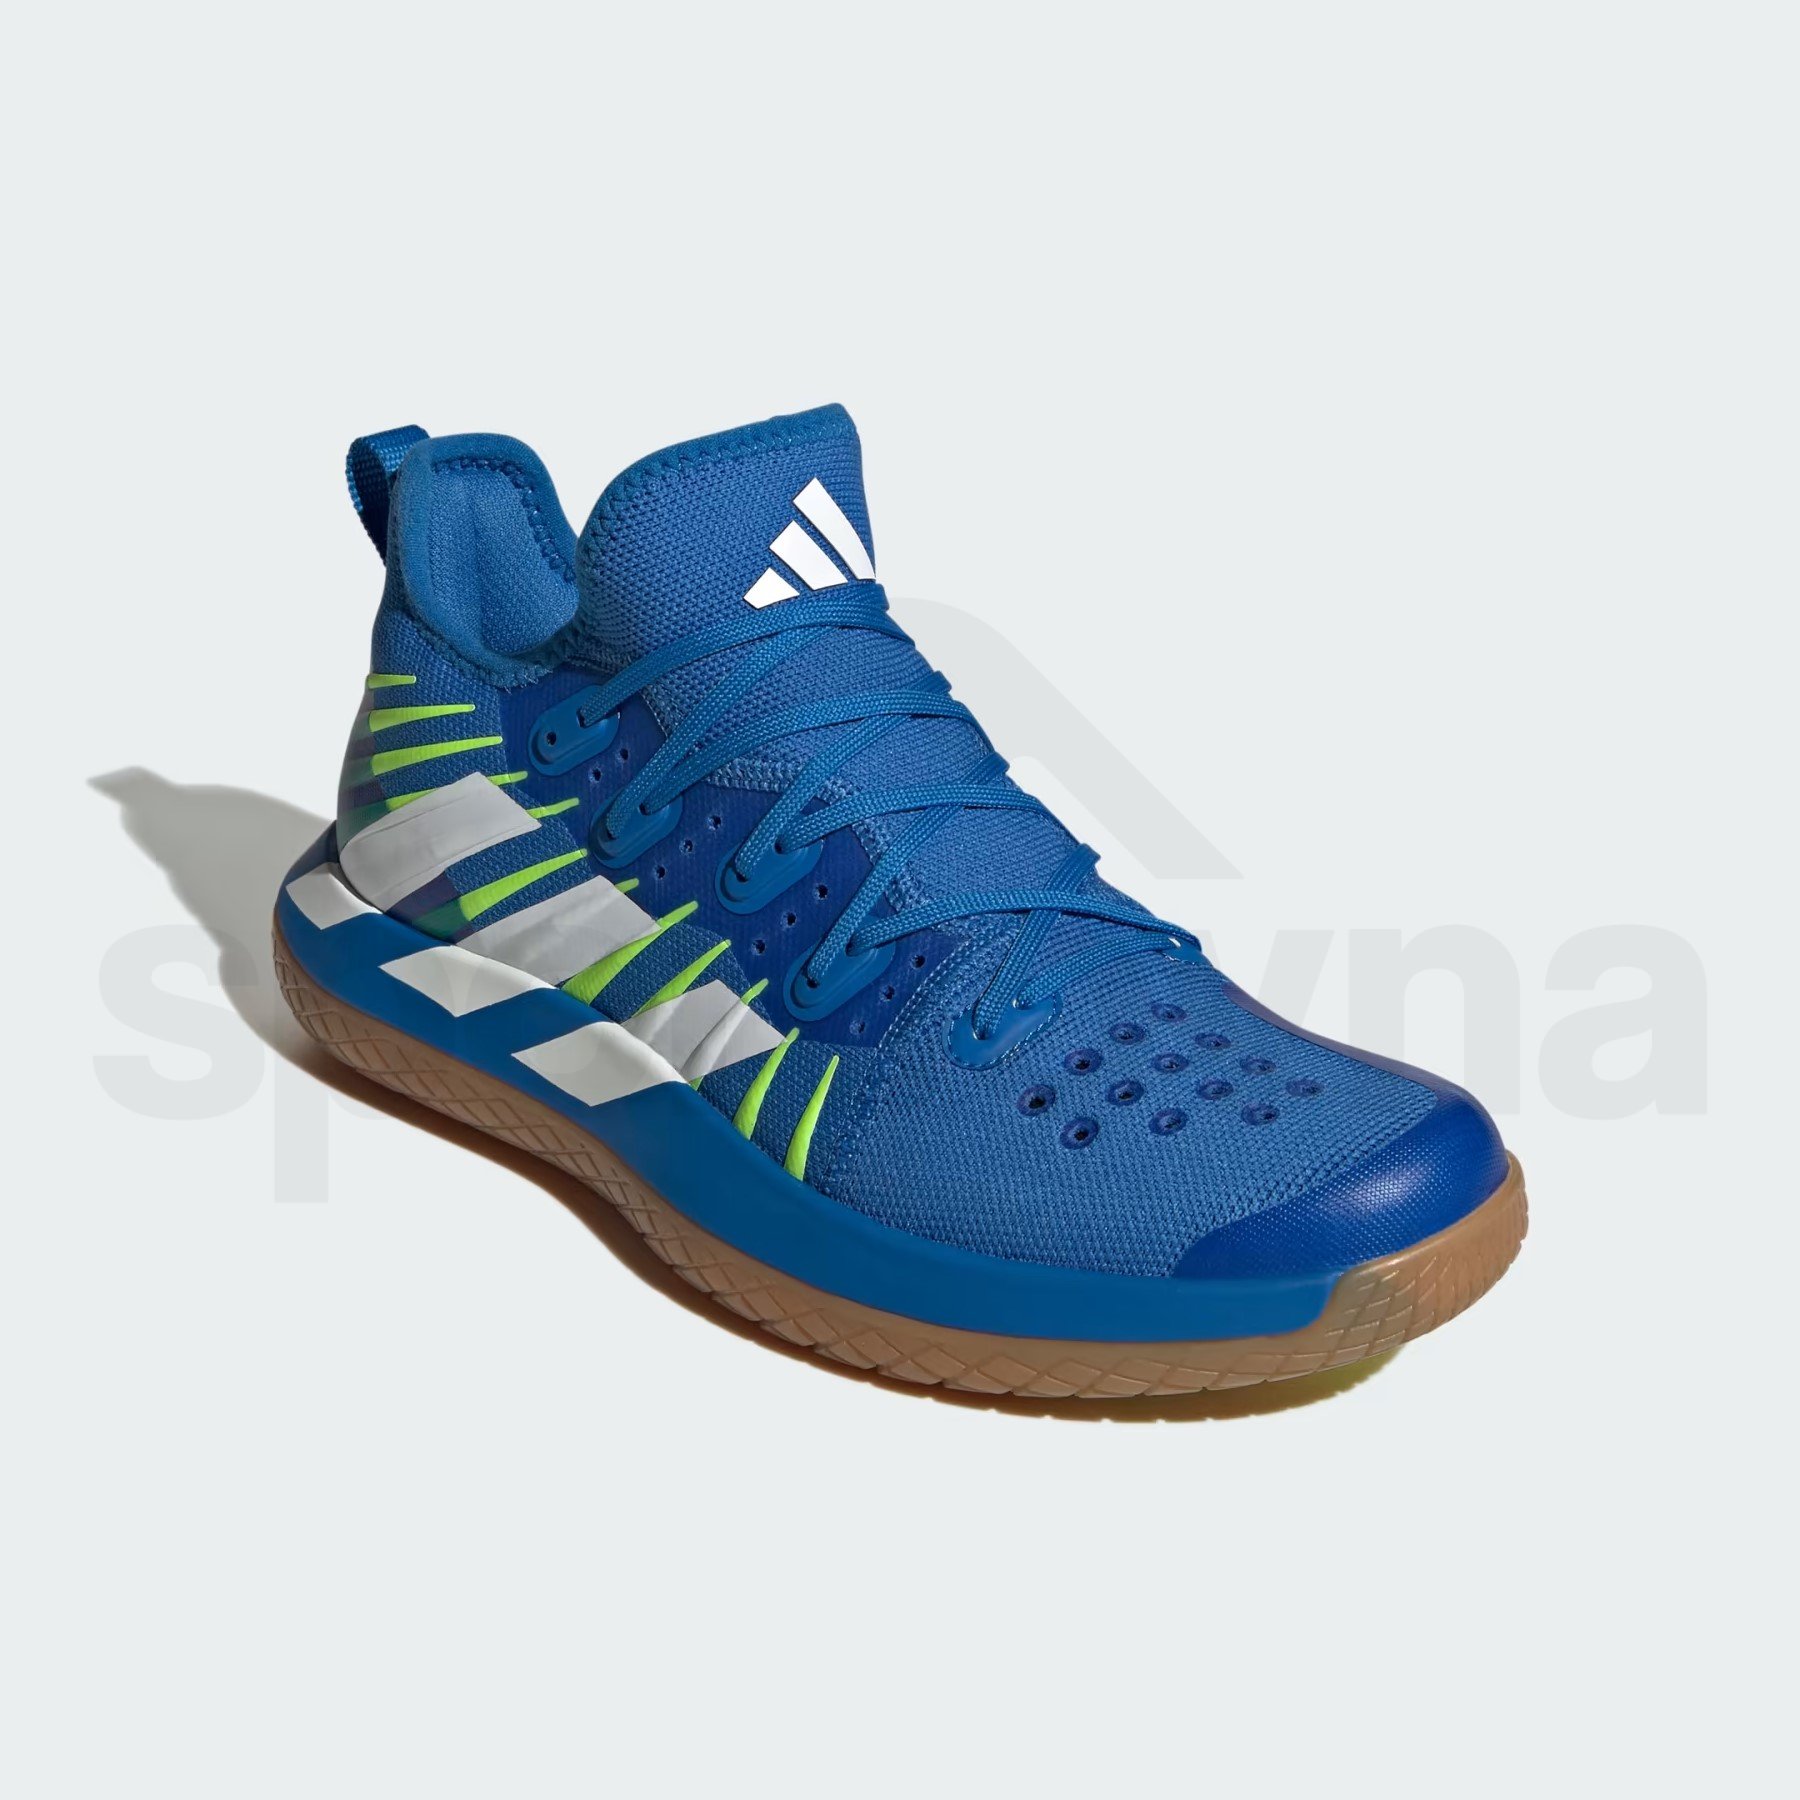 Obuv Adidas Stabil Next Gen M - modrá/bílá/zelená